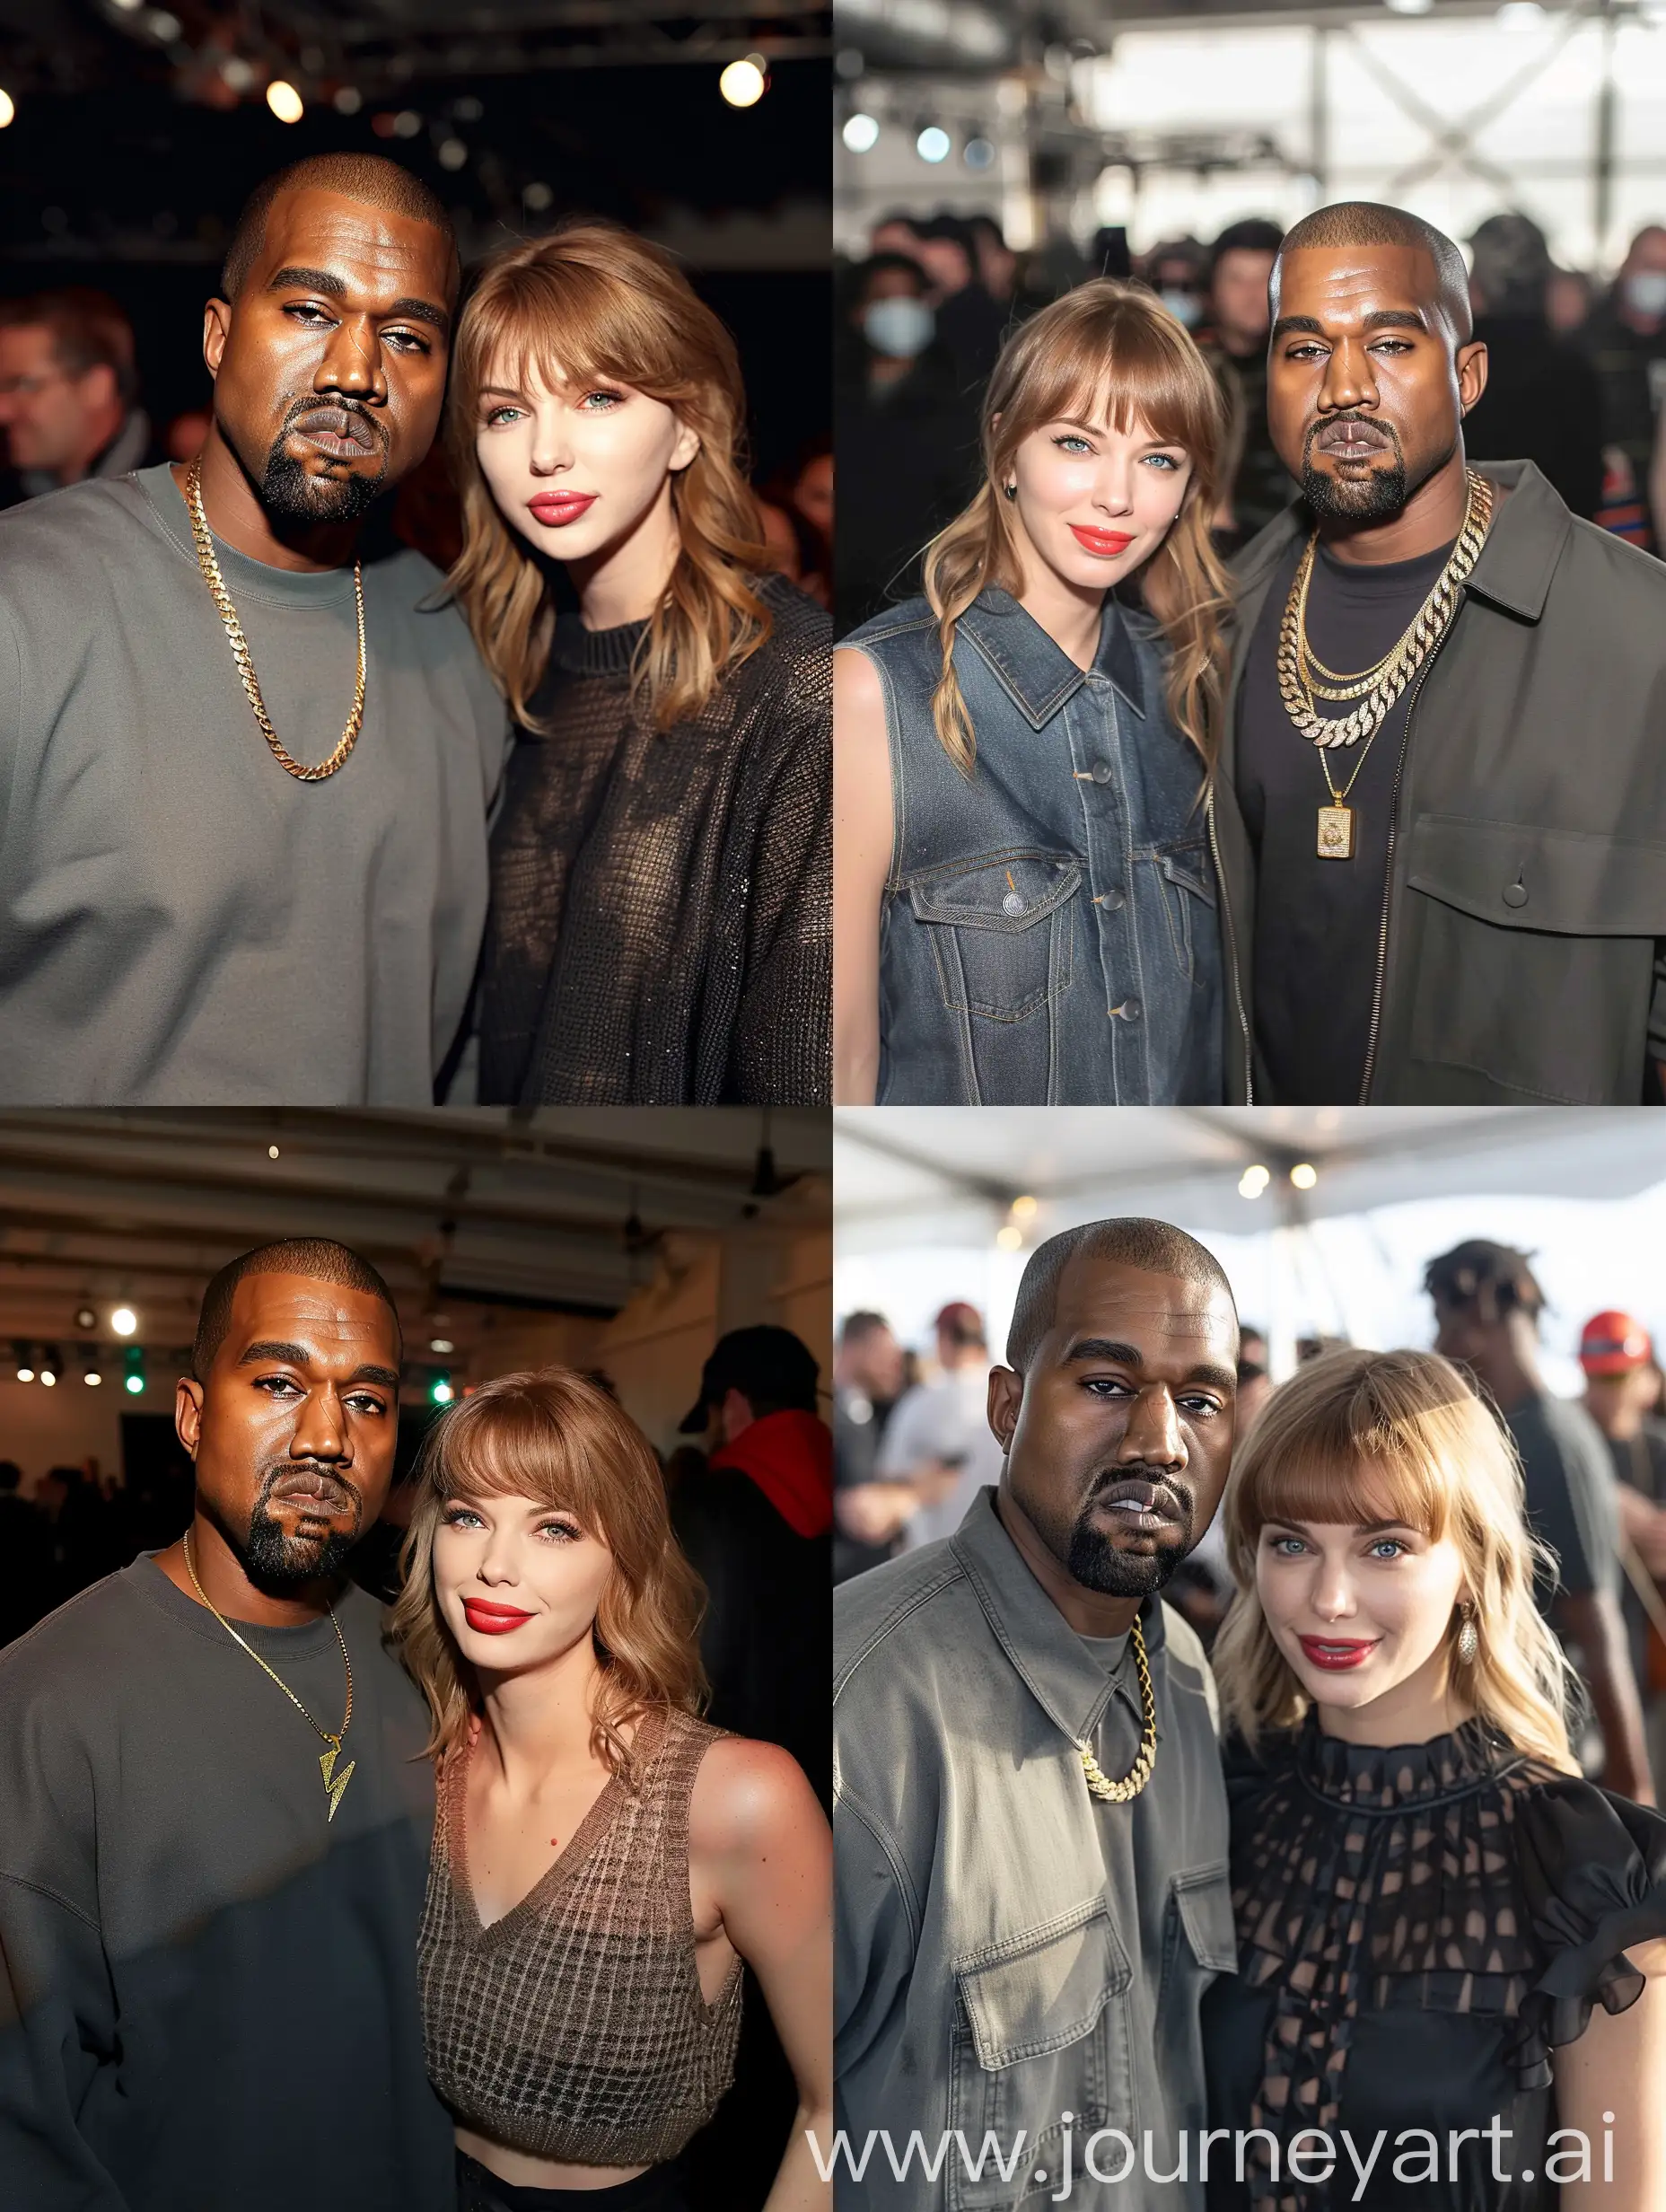 Celebrity-Encounter-Kanye-West-and-Taylor-Swift-Captured-Together-in-Daylight